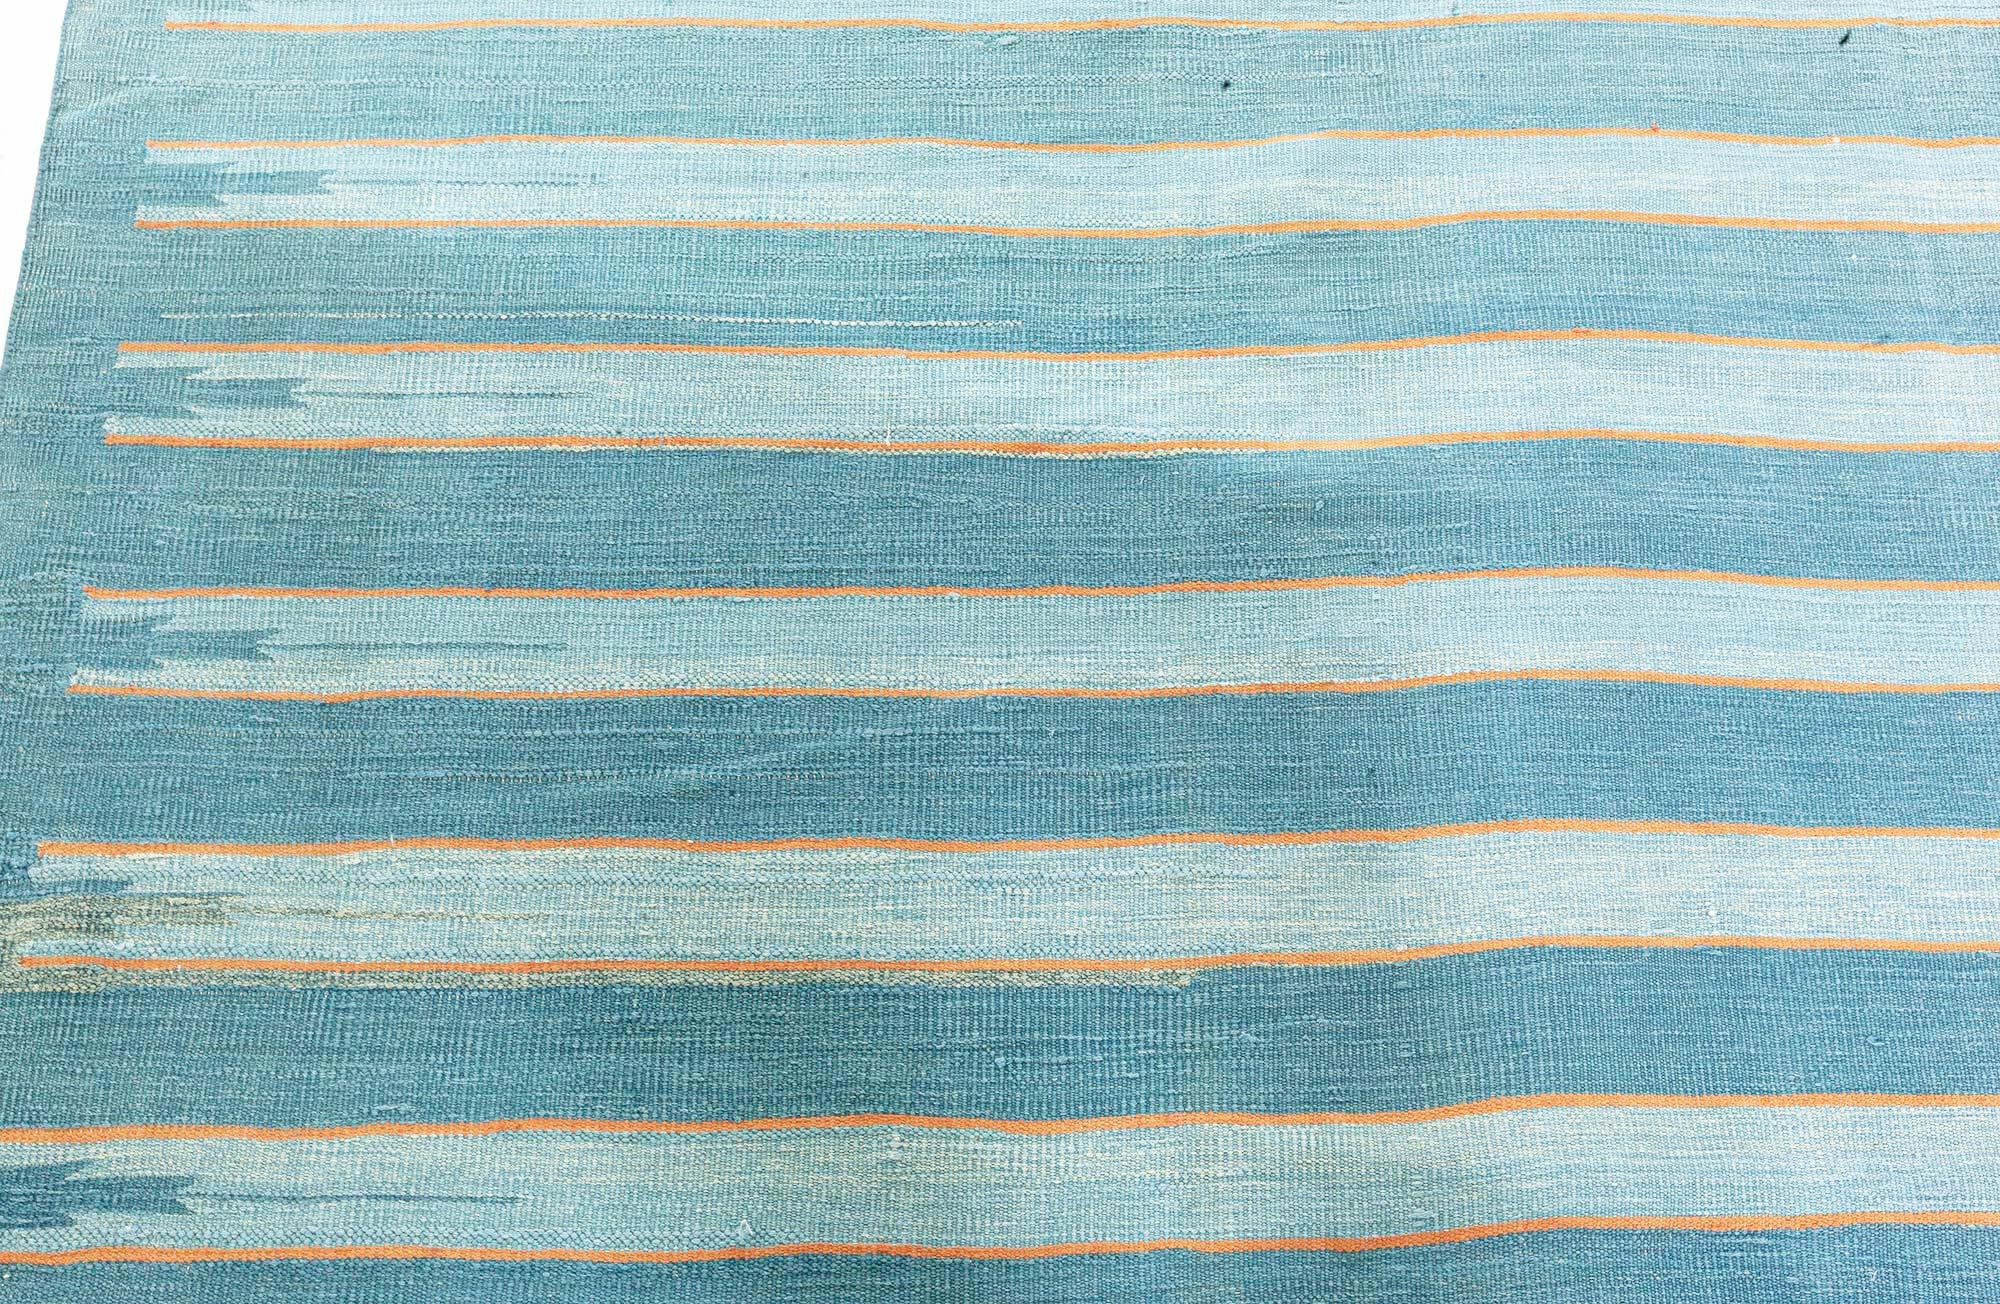 Vintage Indian Dhurrie Striped Blue Rug
Size: 14'1